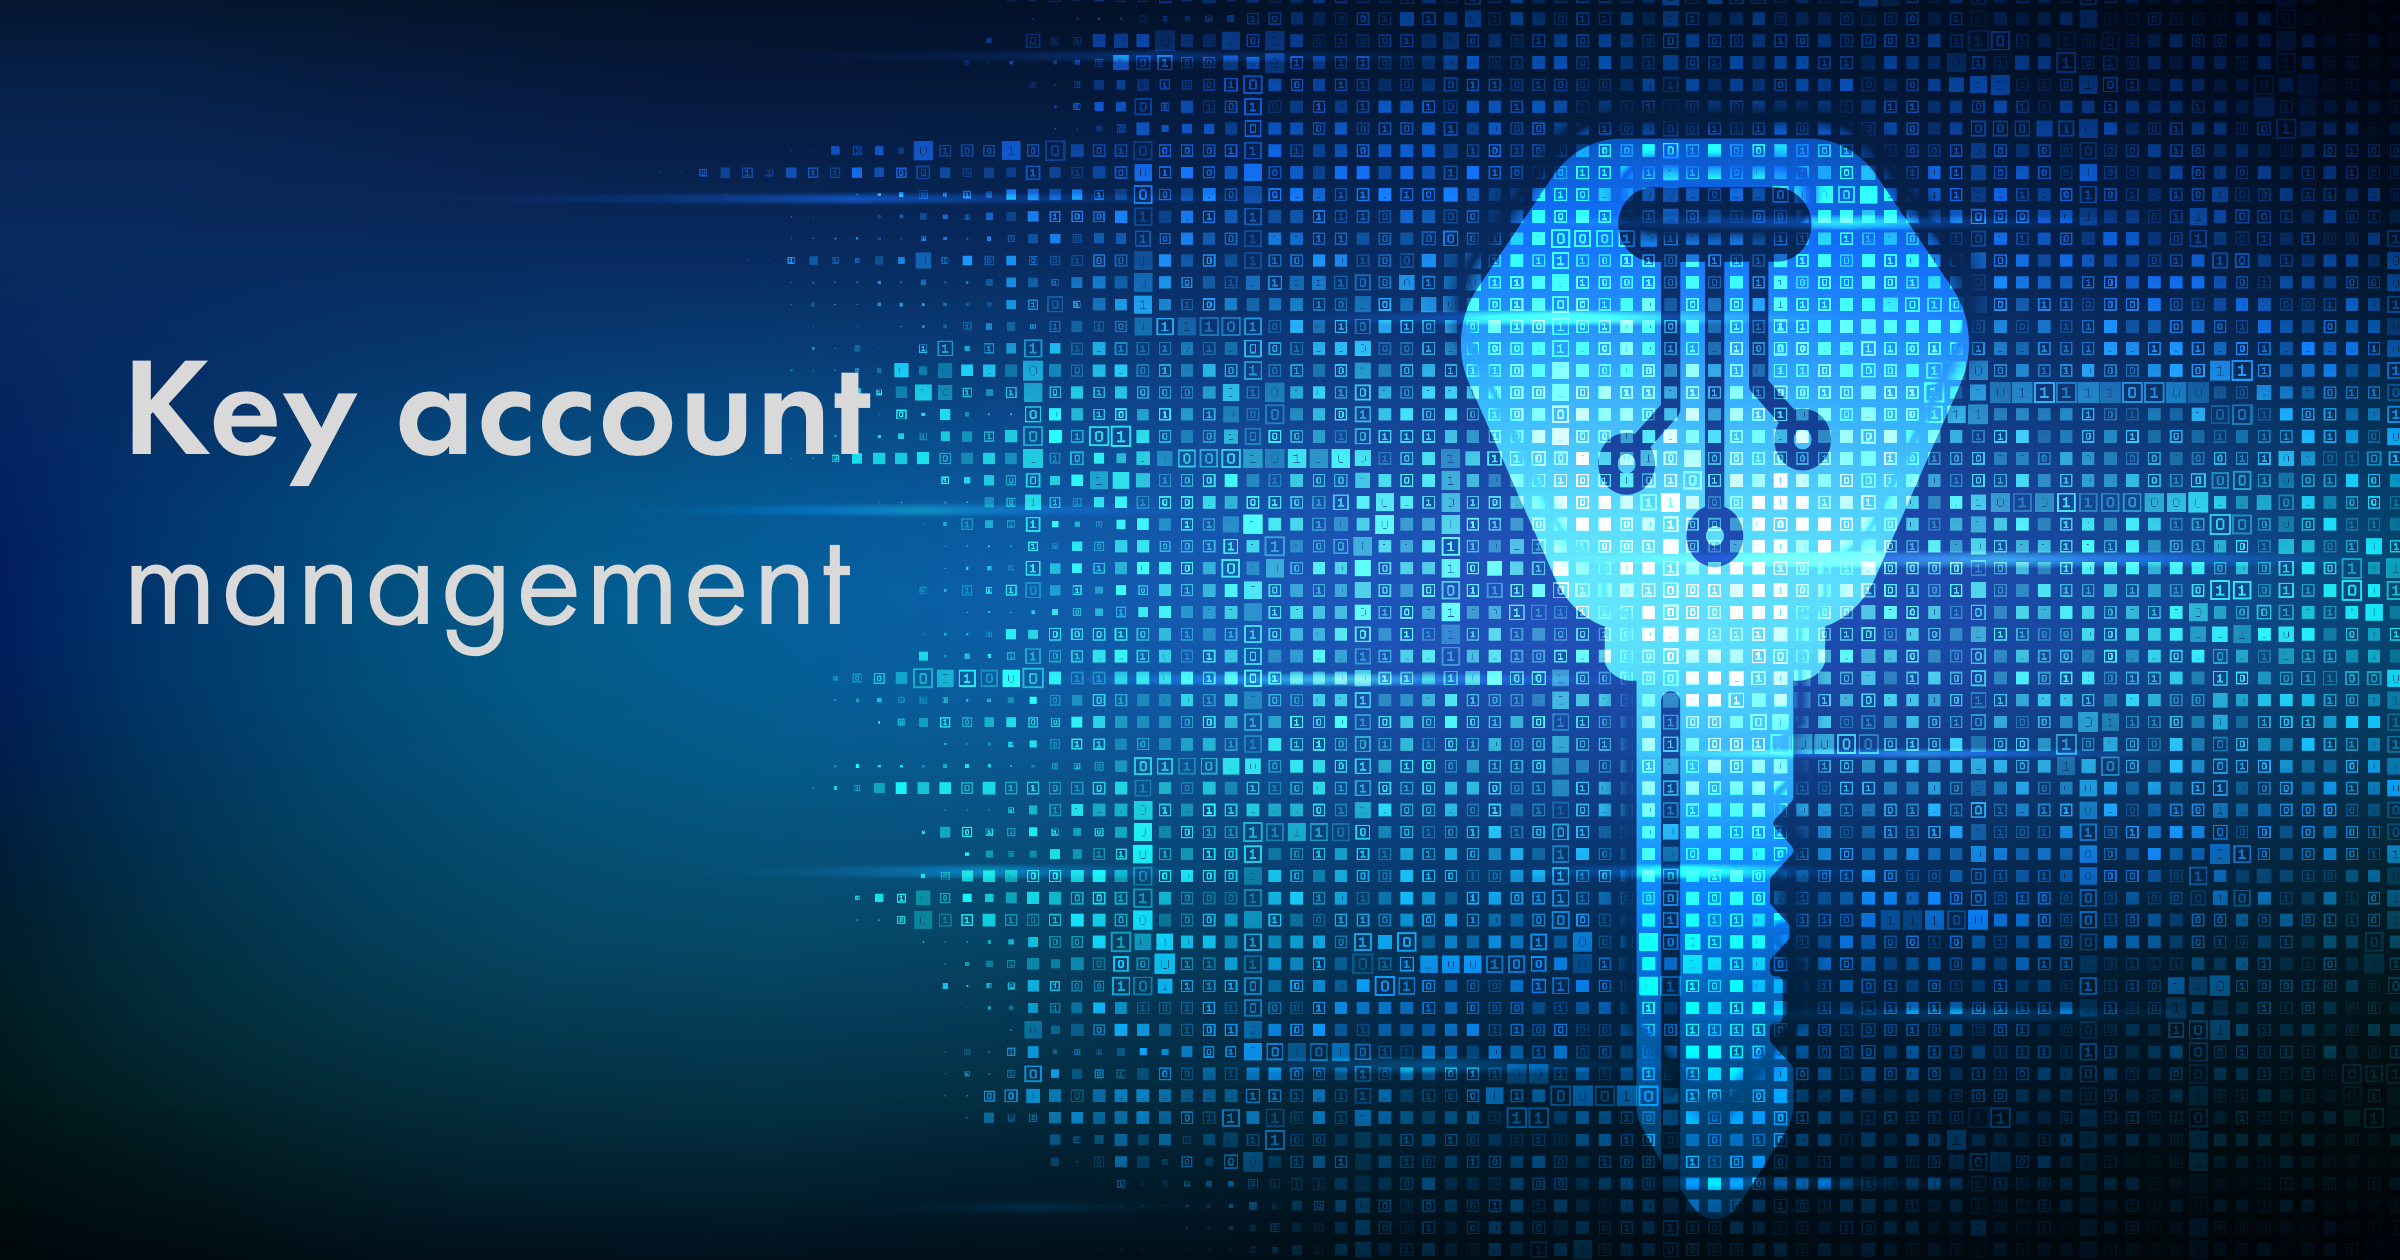 key account management case study